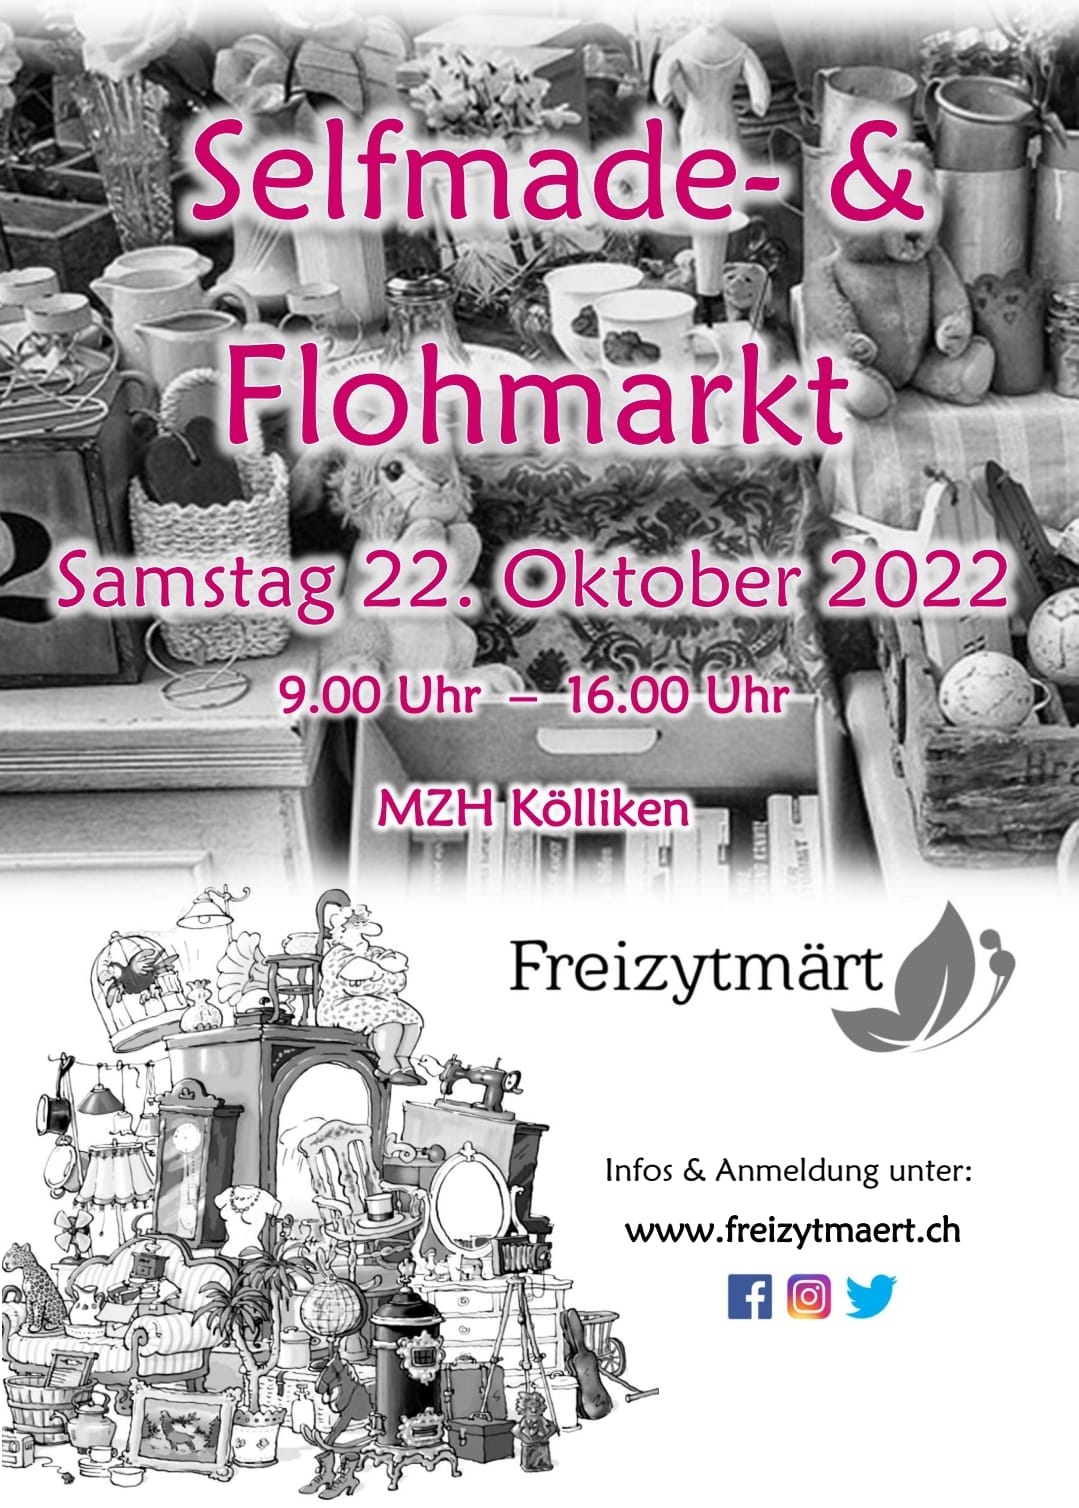 Selfmade- und Flohmarkt in Kölliken / Oktober 2022